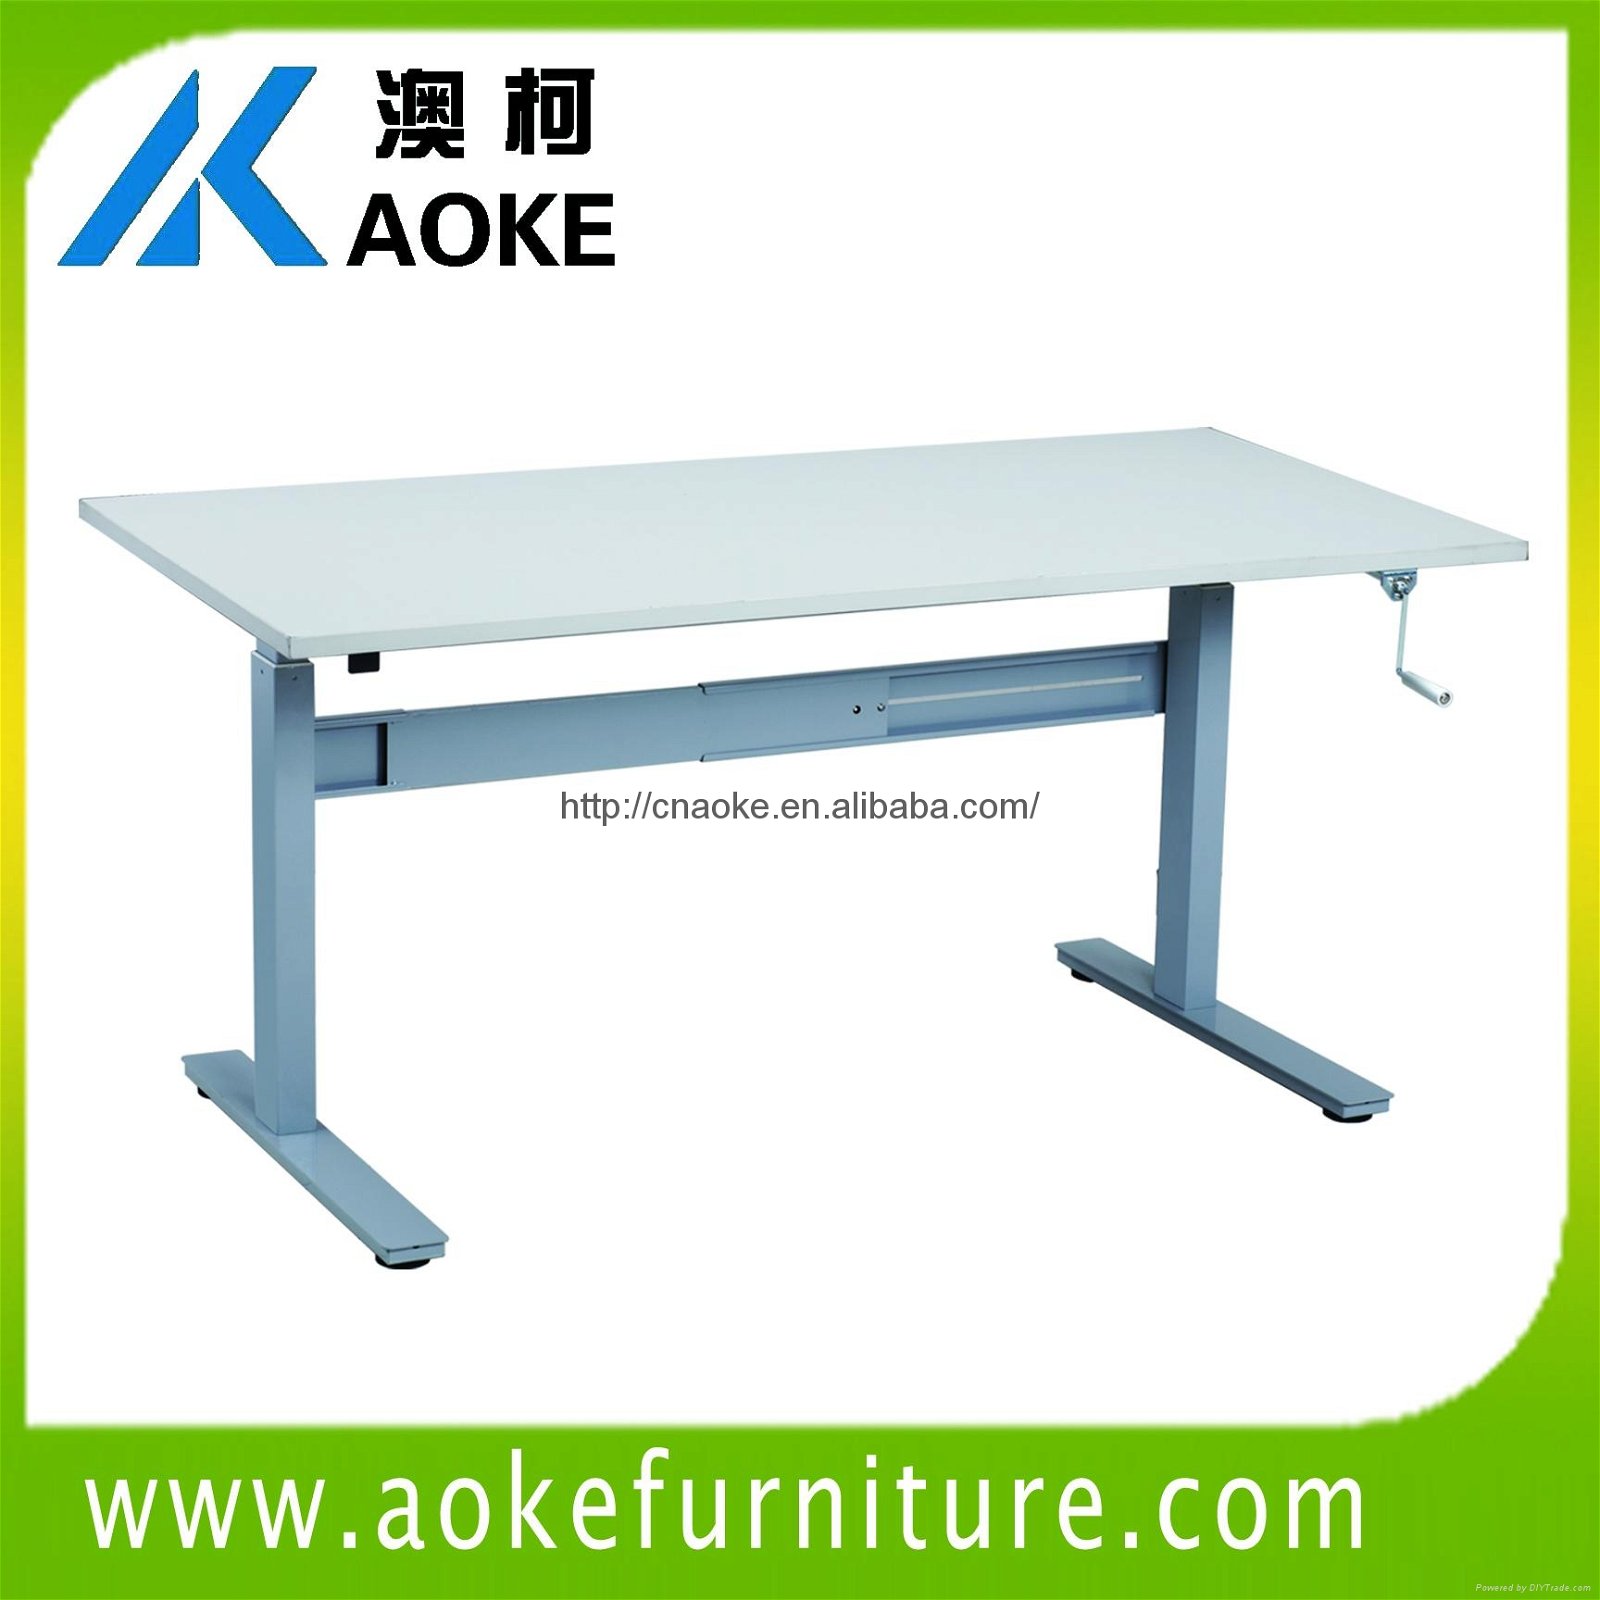 AOKE AK02HT-B manual cranked adjustable tables 3